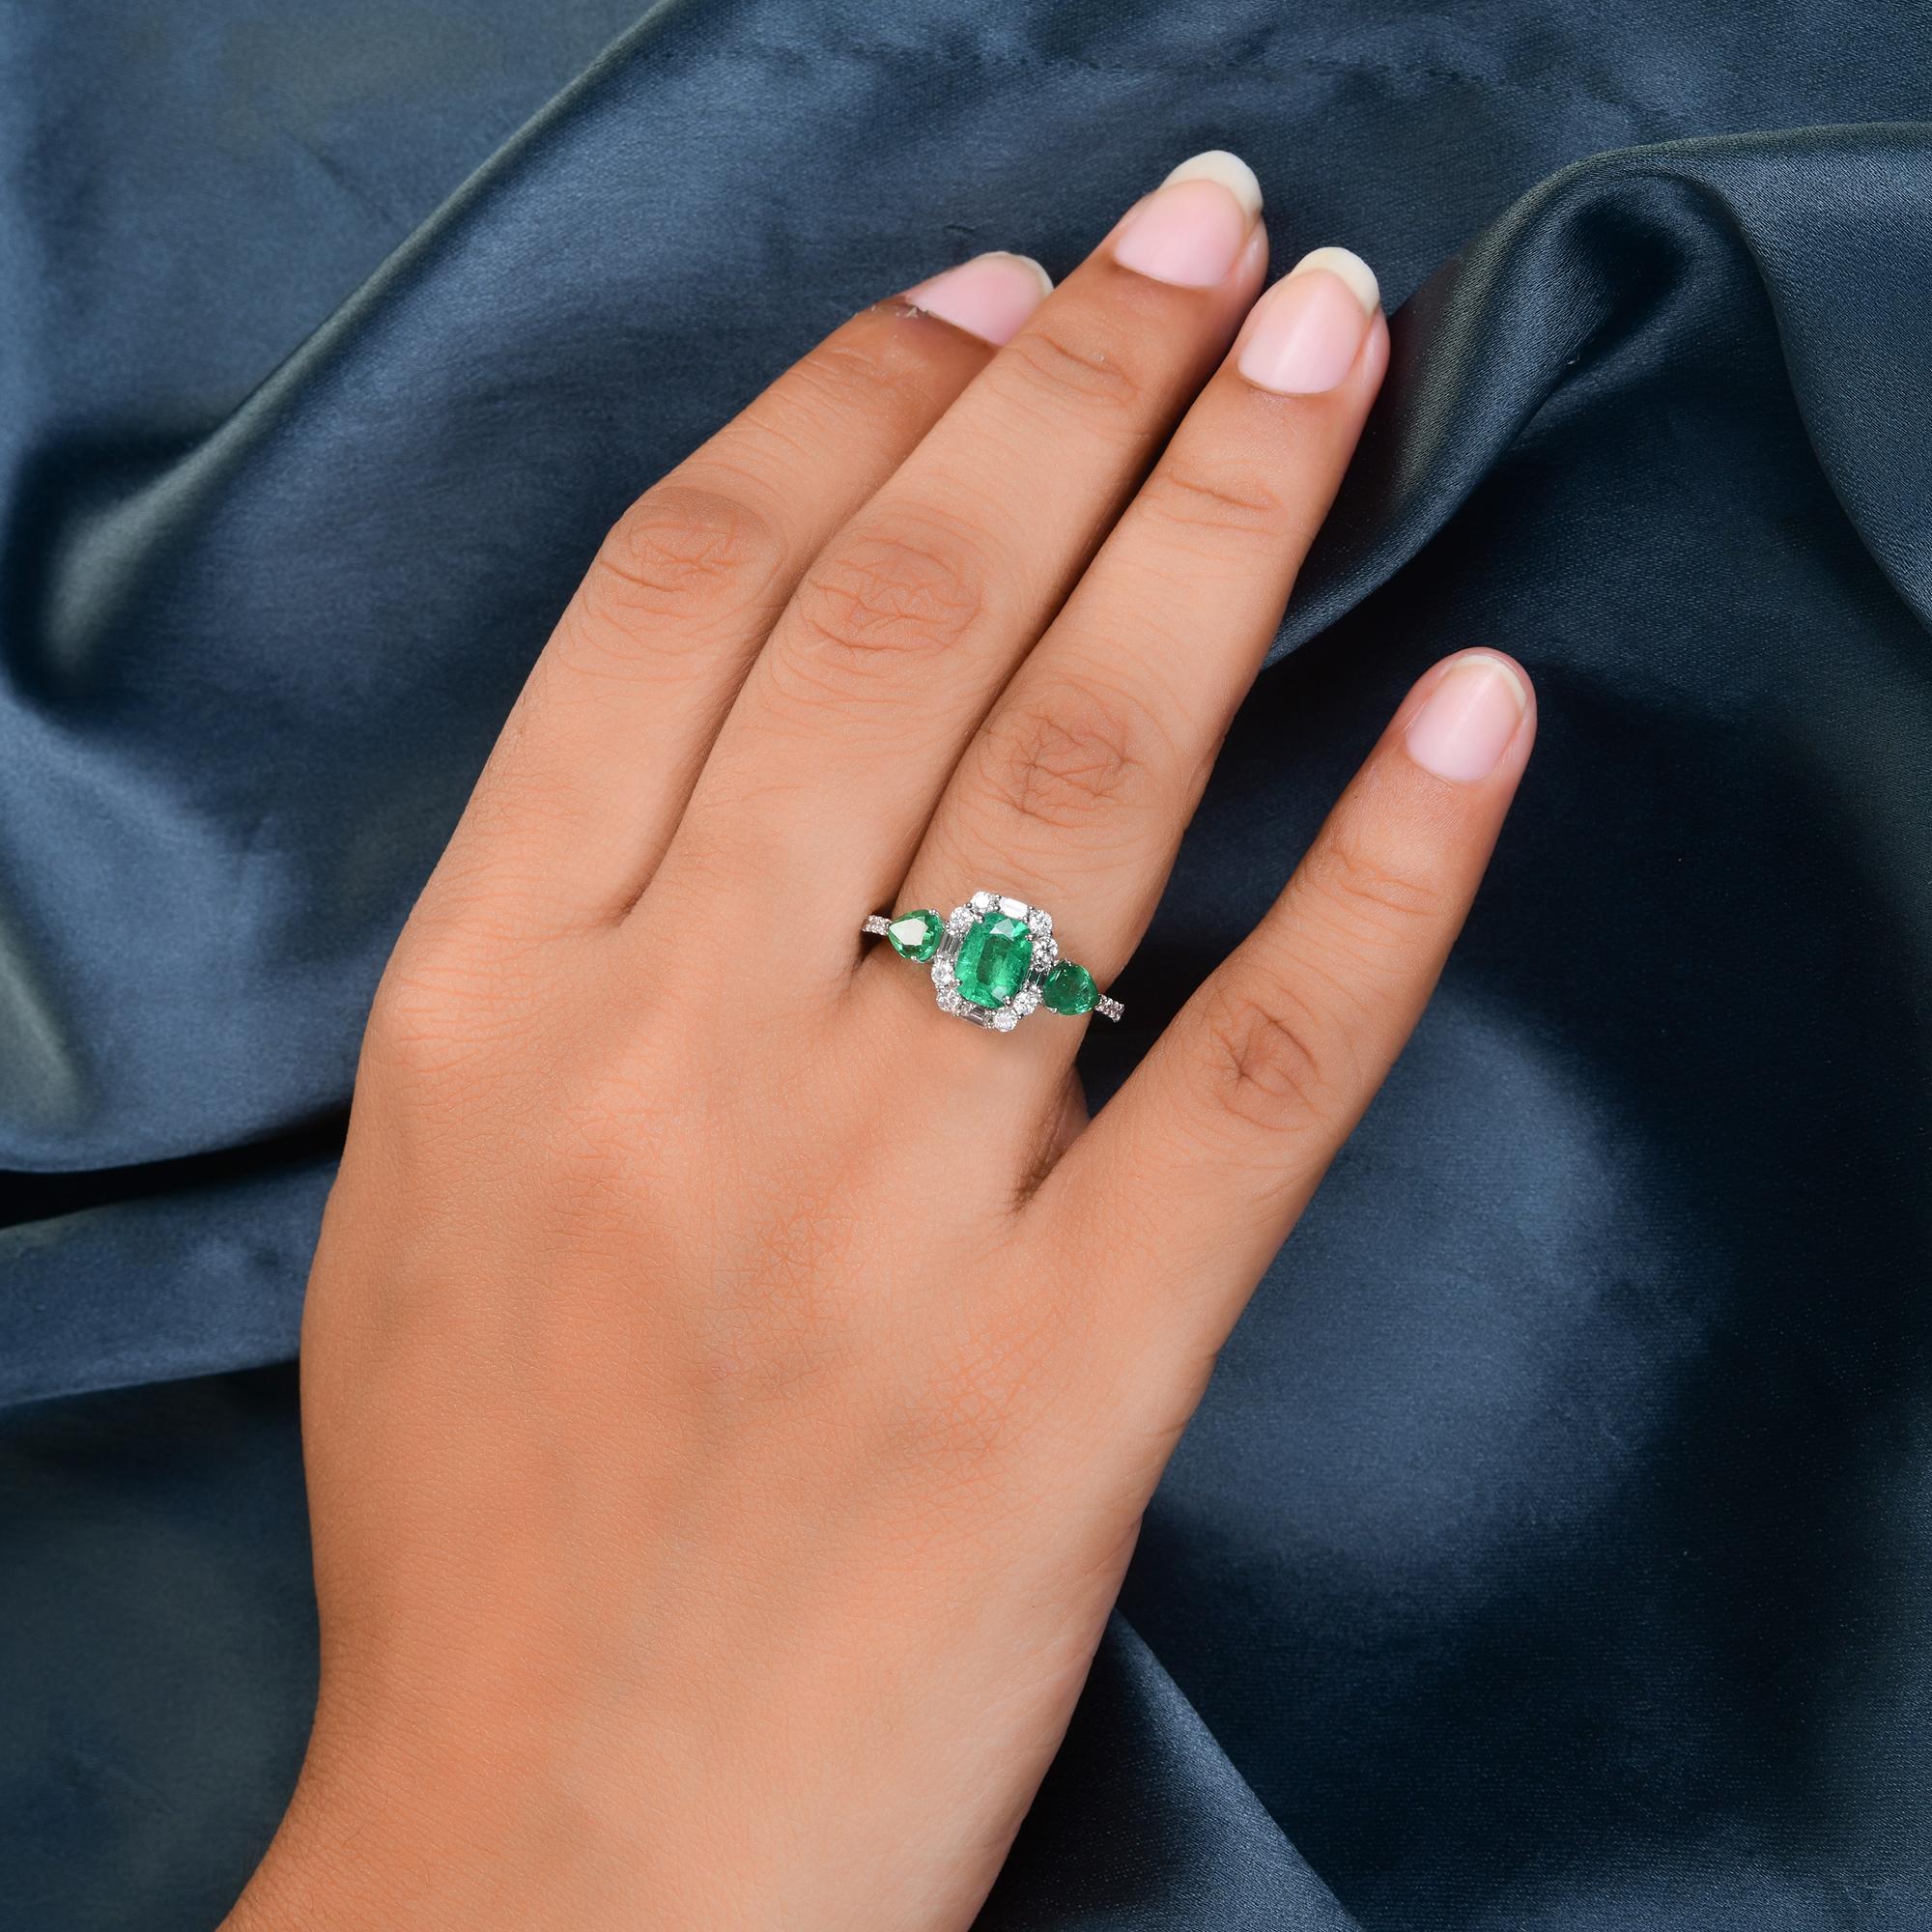 Pear Cut Zambian Emerald Gemstone Ring Diamond 14 Karat White Gold Handmade Fine Jewelry For Sale